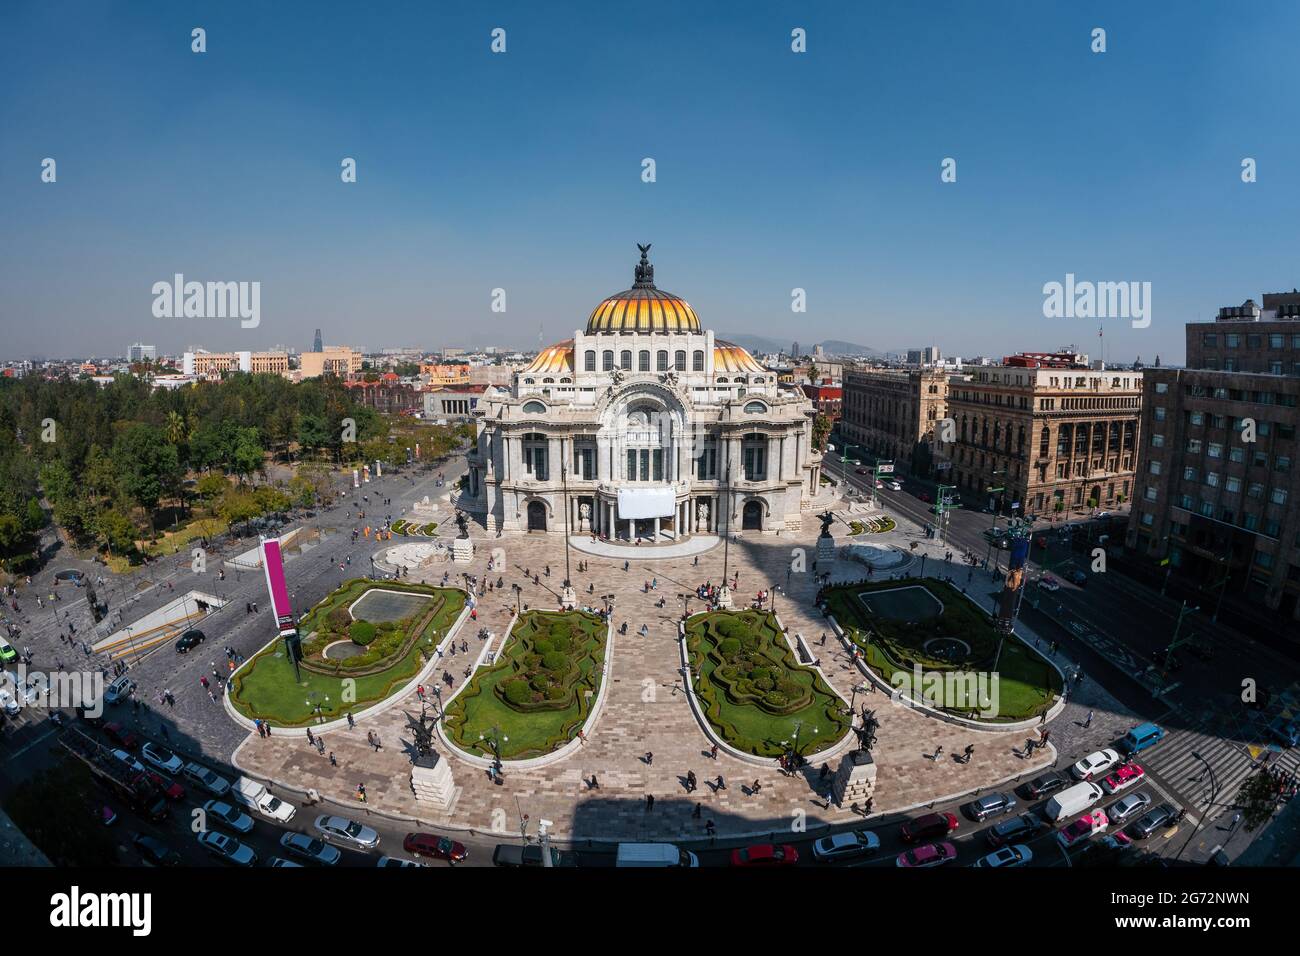 Historical landmark Palace of Fine Arts (Spanish: Palacio de Bellas Artes) in the Historic Centre of Mexico City, Mexico. Stock Photo